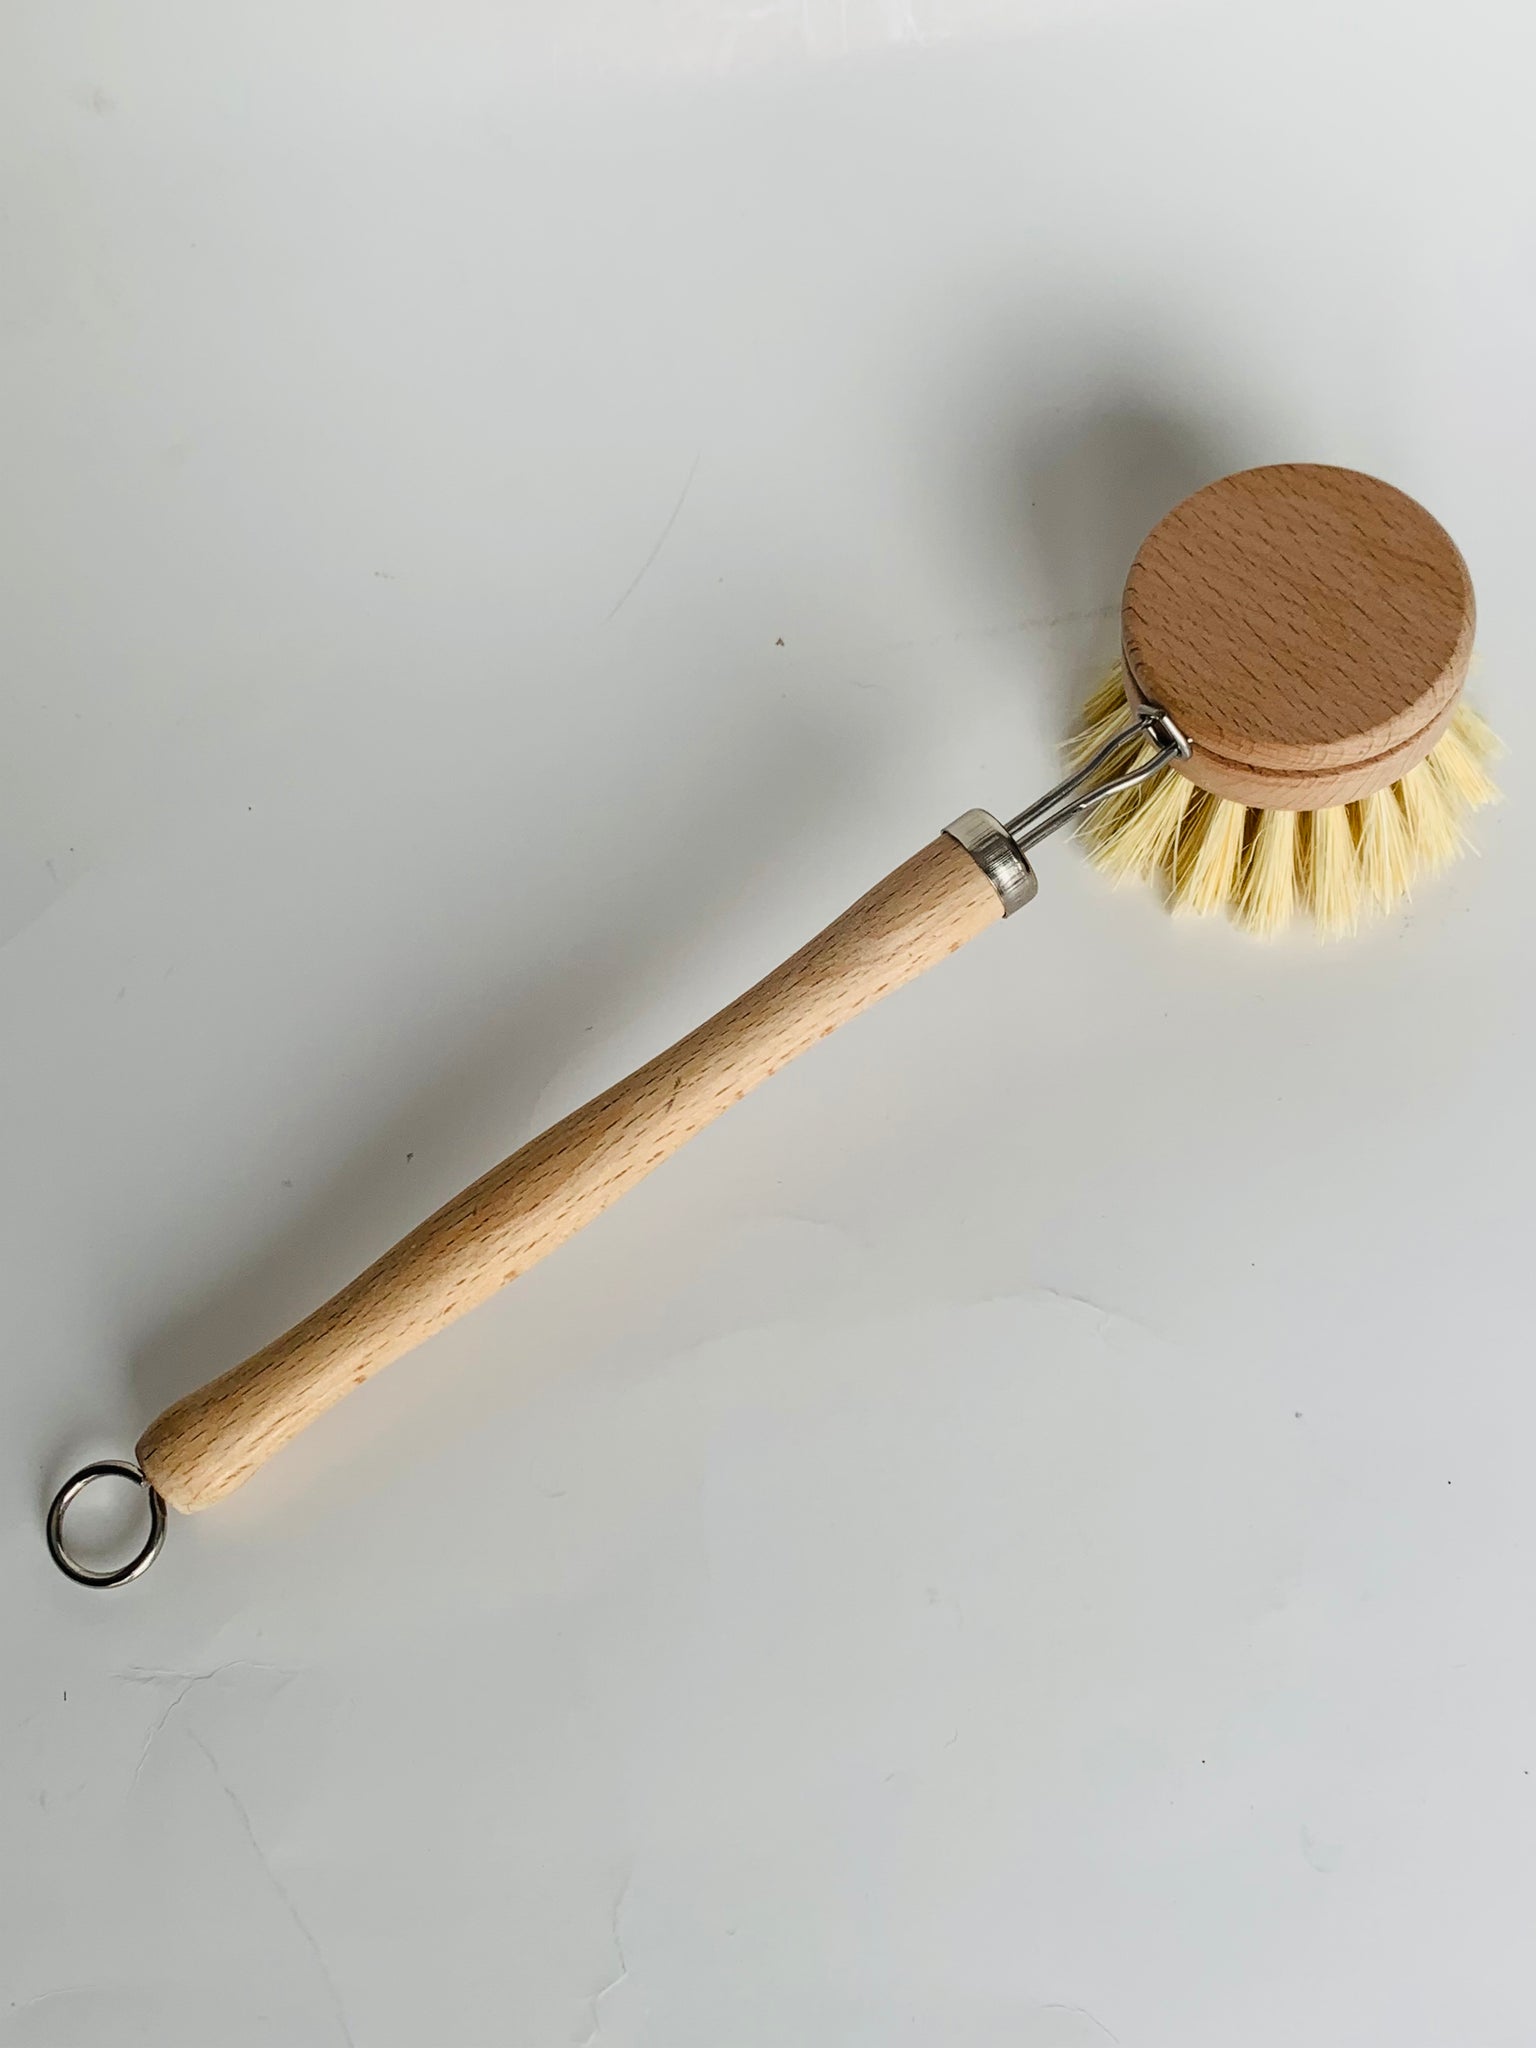 Larga Vitae 6 pcs Wooden Dish Brush Replacement Heads Made of